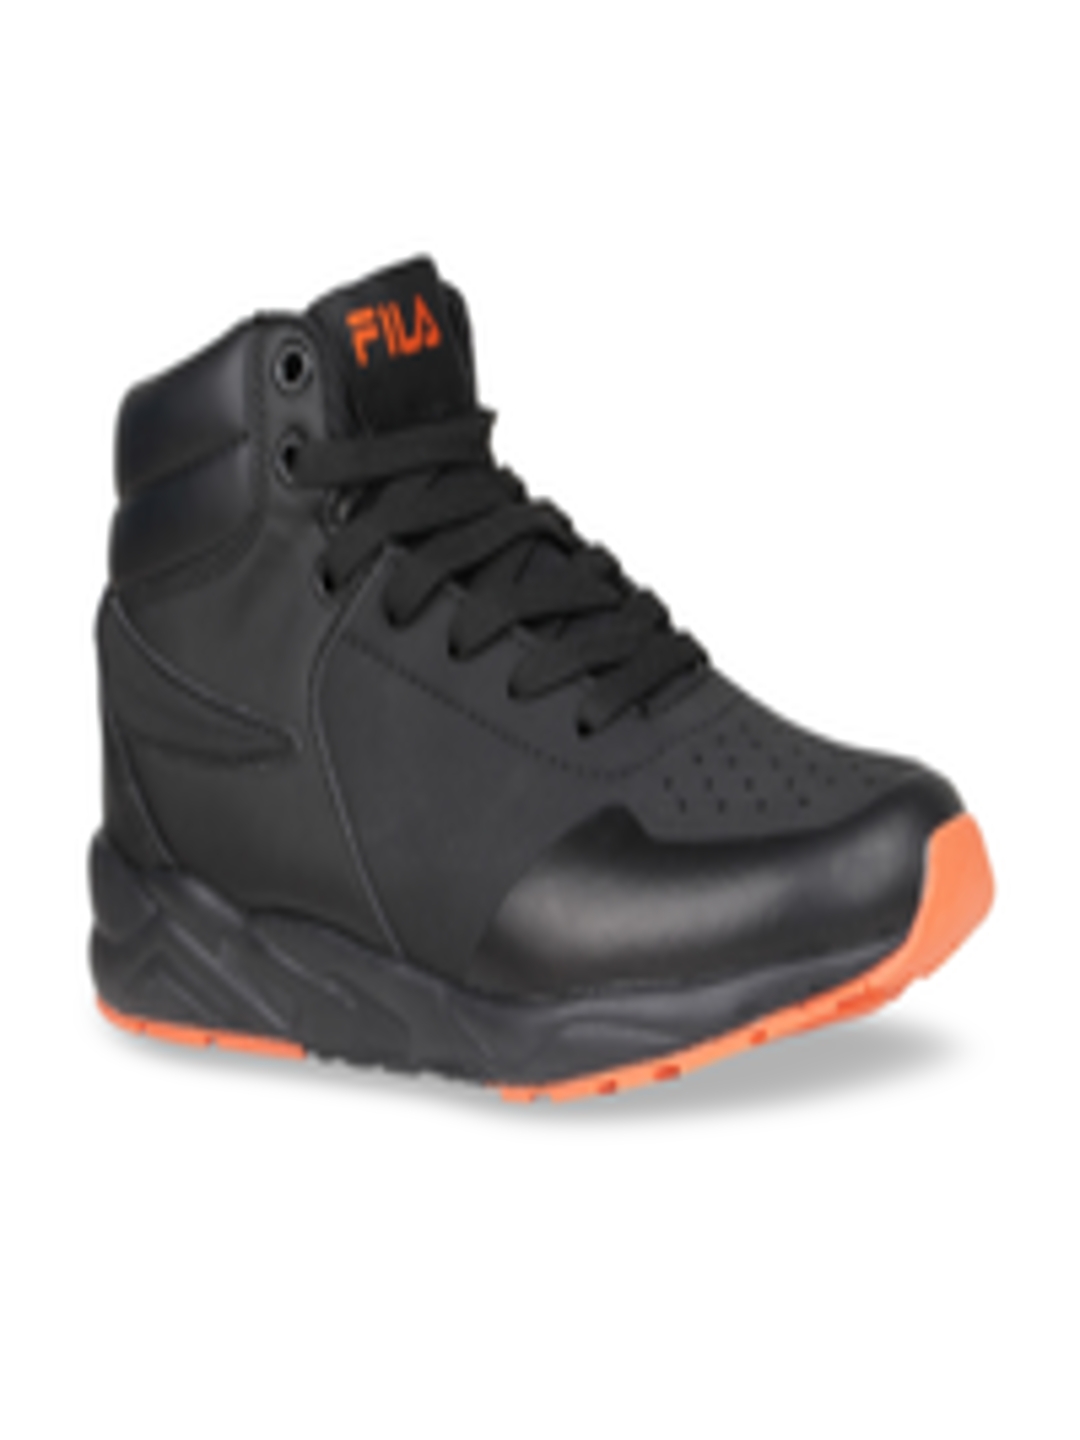 Buy FILA Kids Black & Orange Colourblocked Sneakers - Casual Shoes for